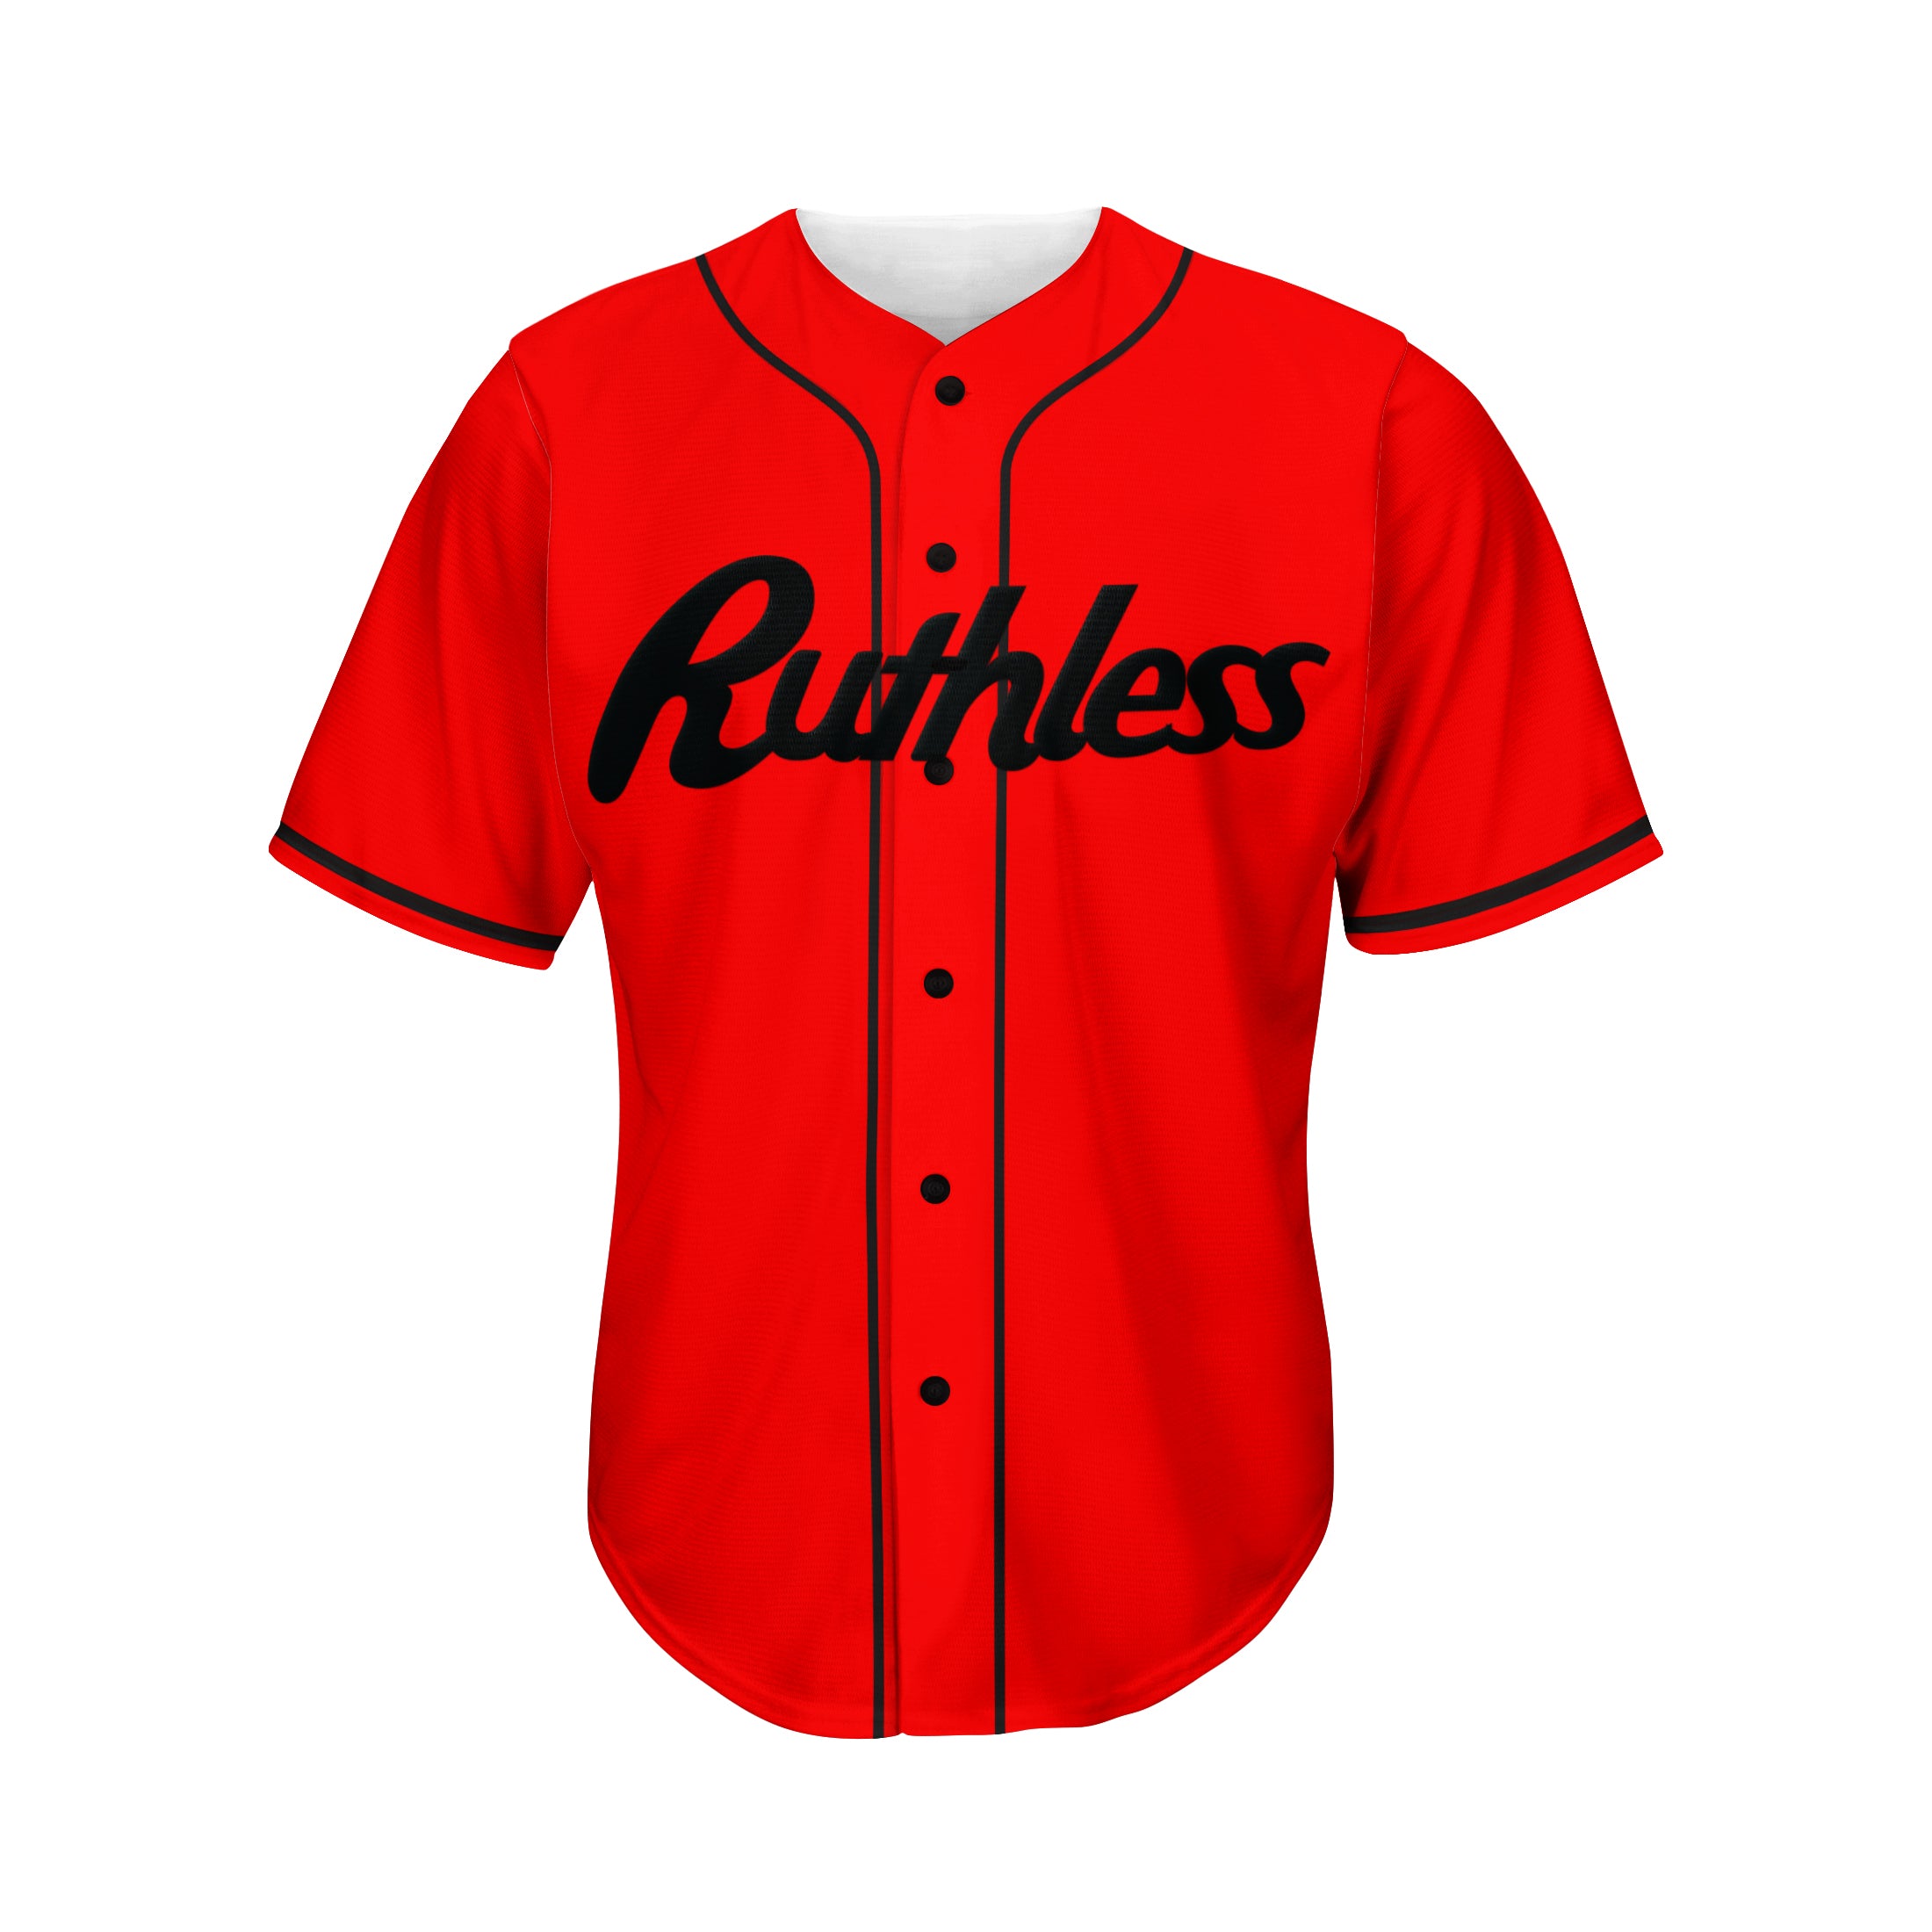 Classic Red Baseball Jersey